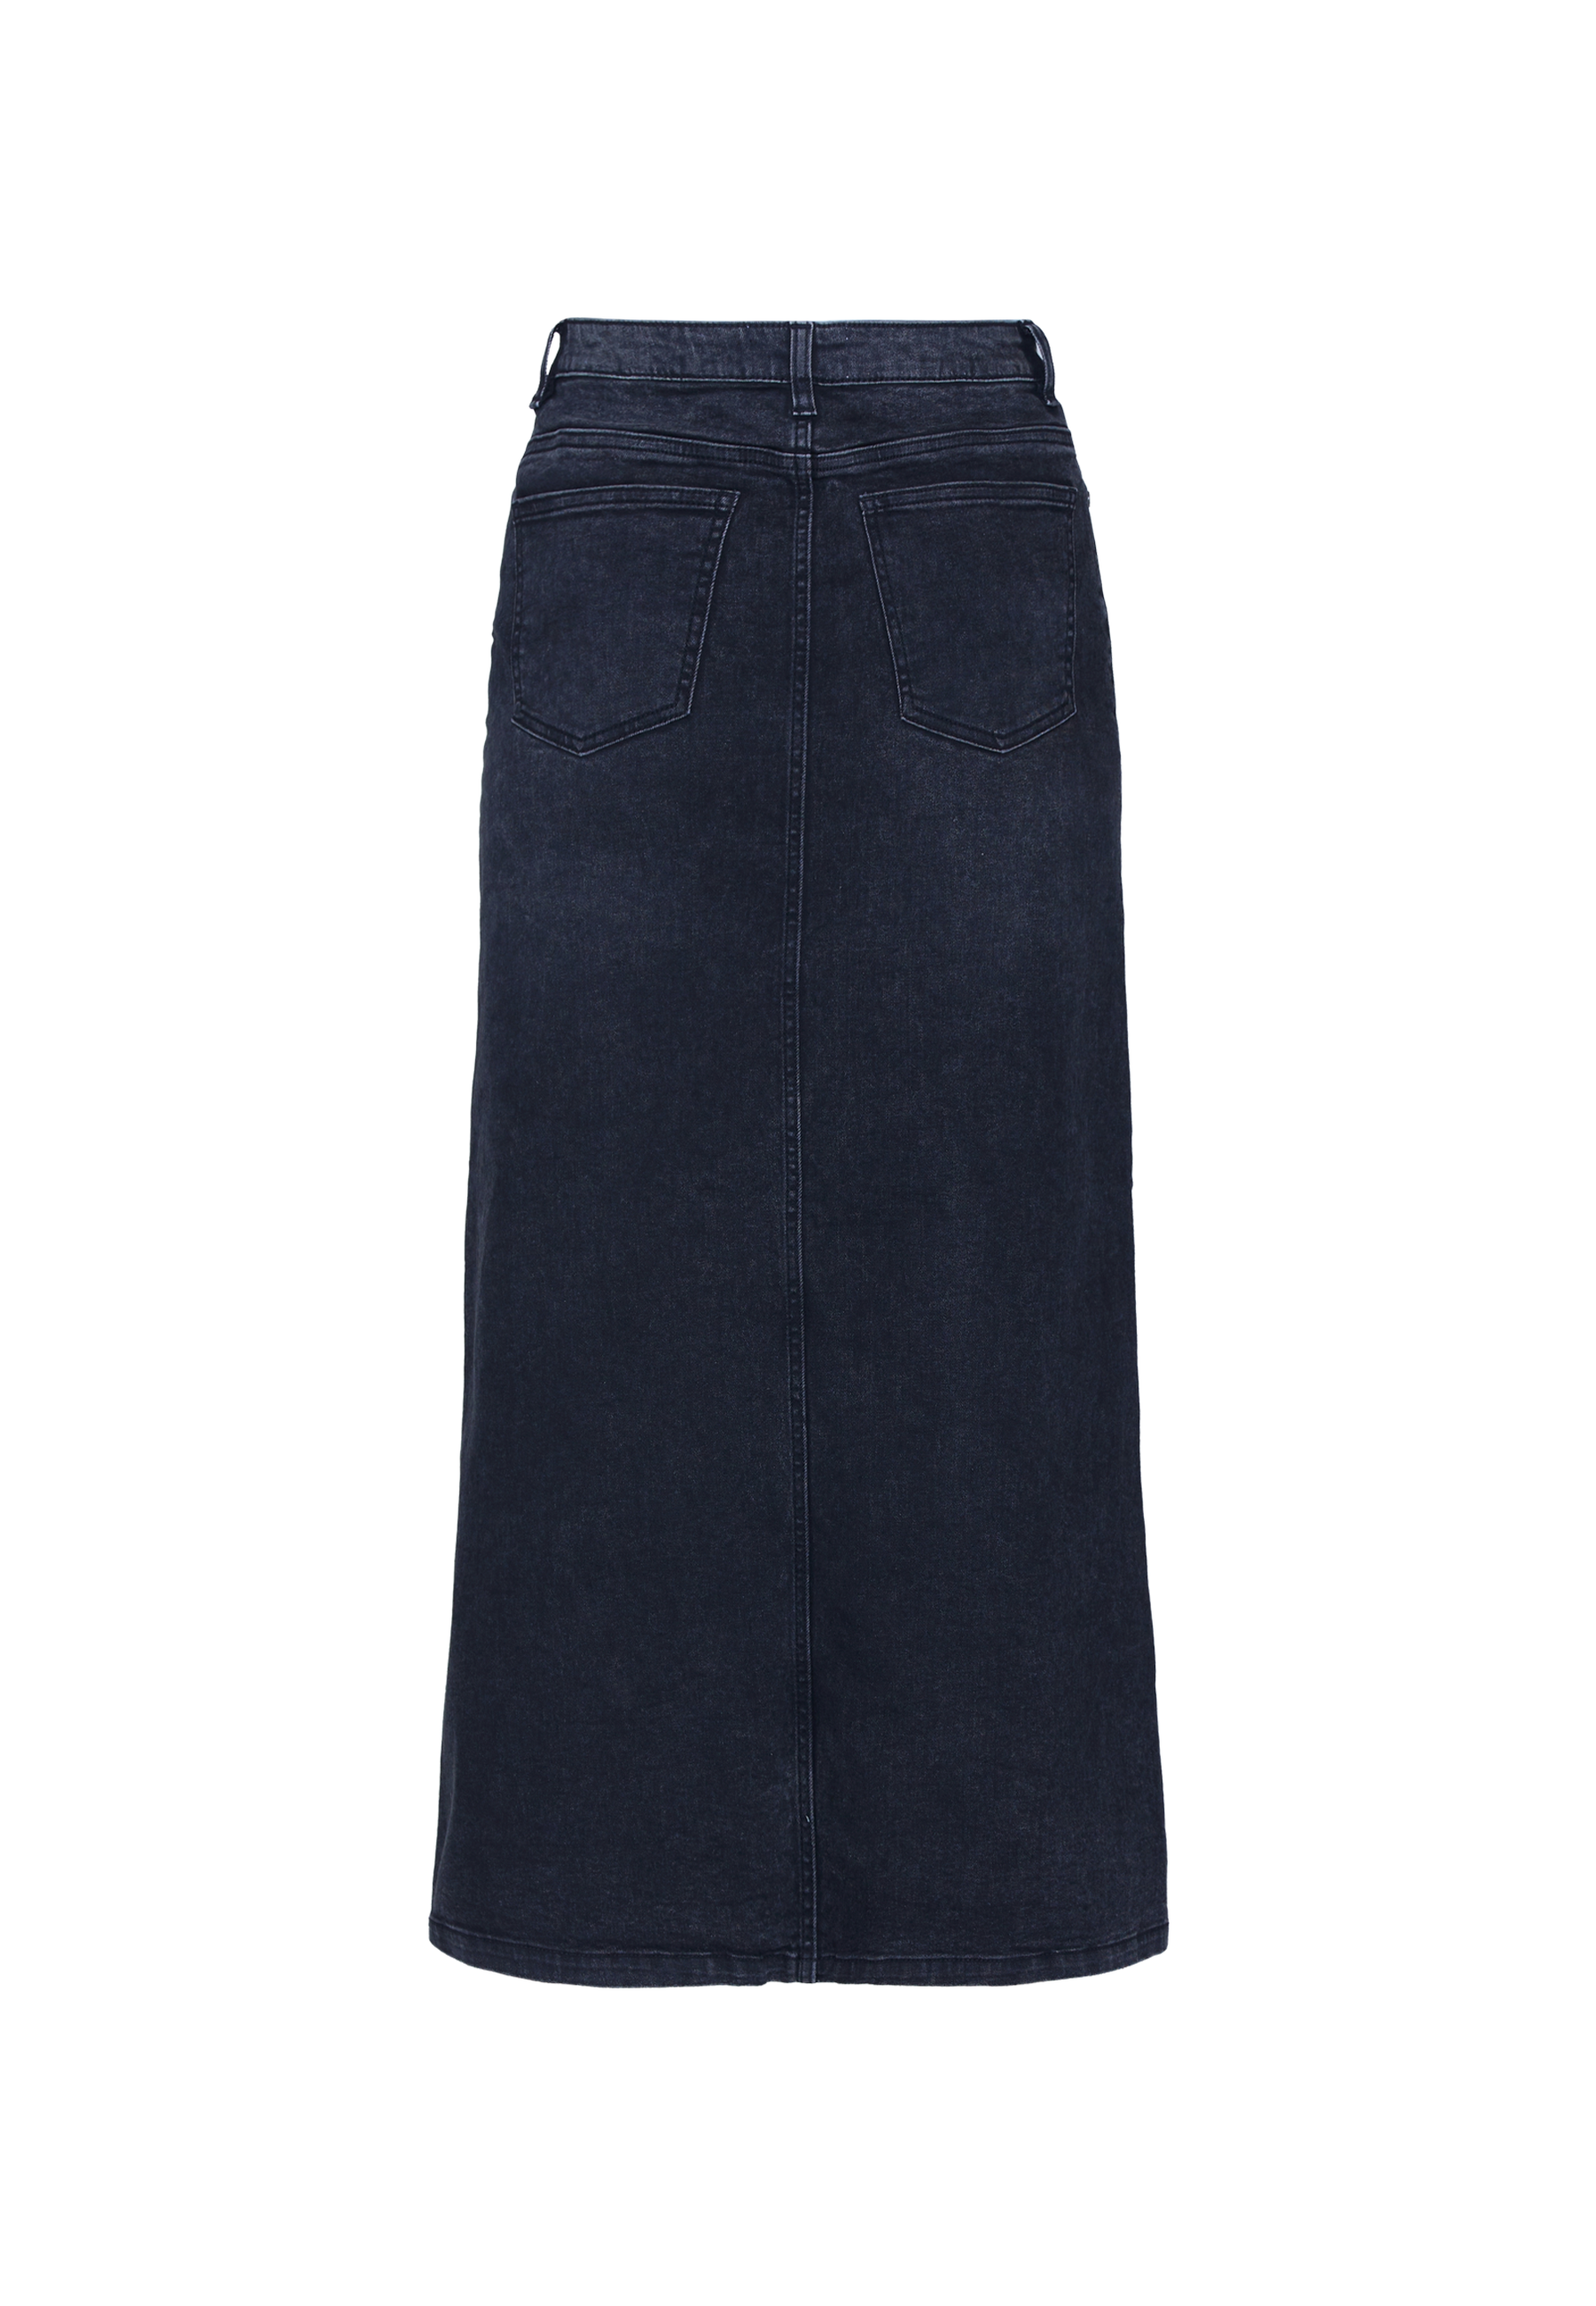 Sisters Point Olia Long Denim Skirt, Dark grey wash